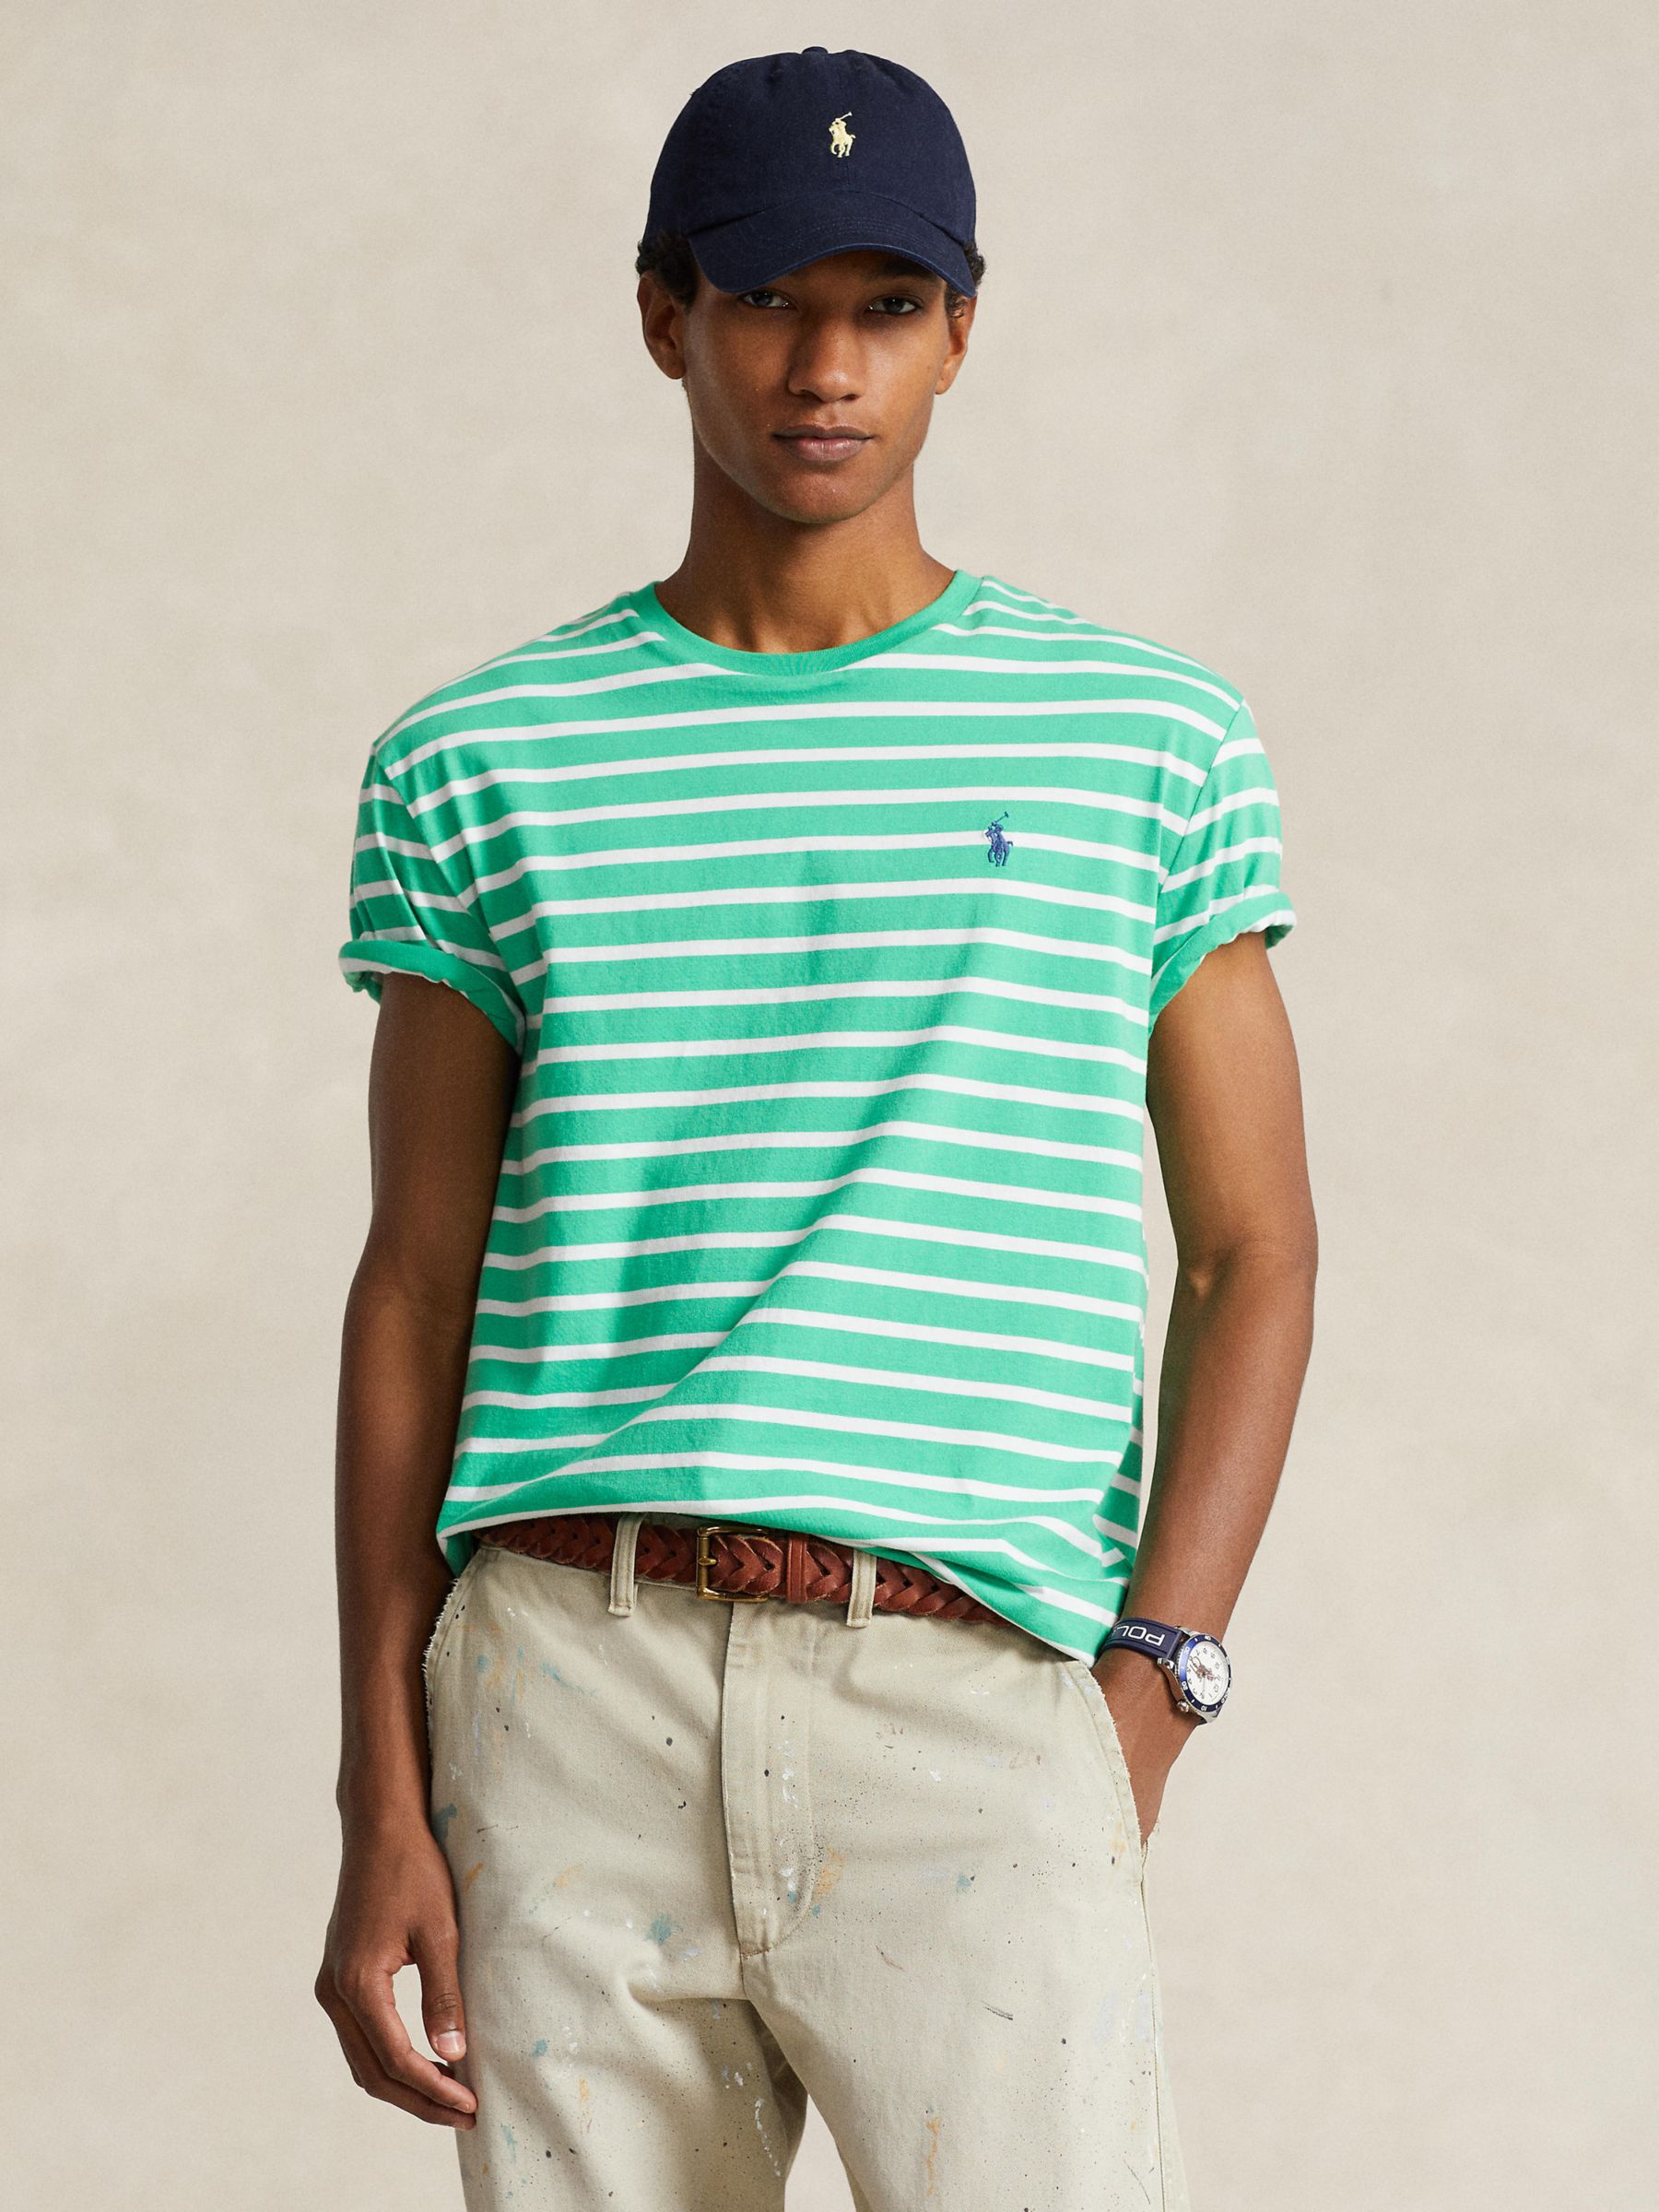 Ralph Lauren Classic Fit Striped Jersey T-Shirt, Green/White, M